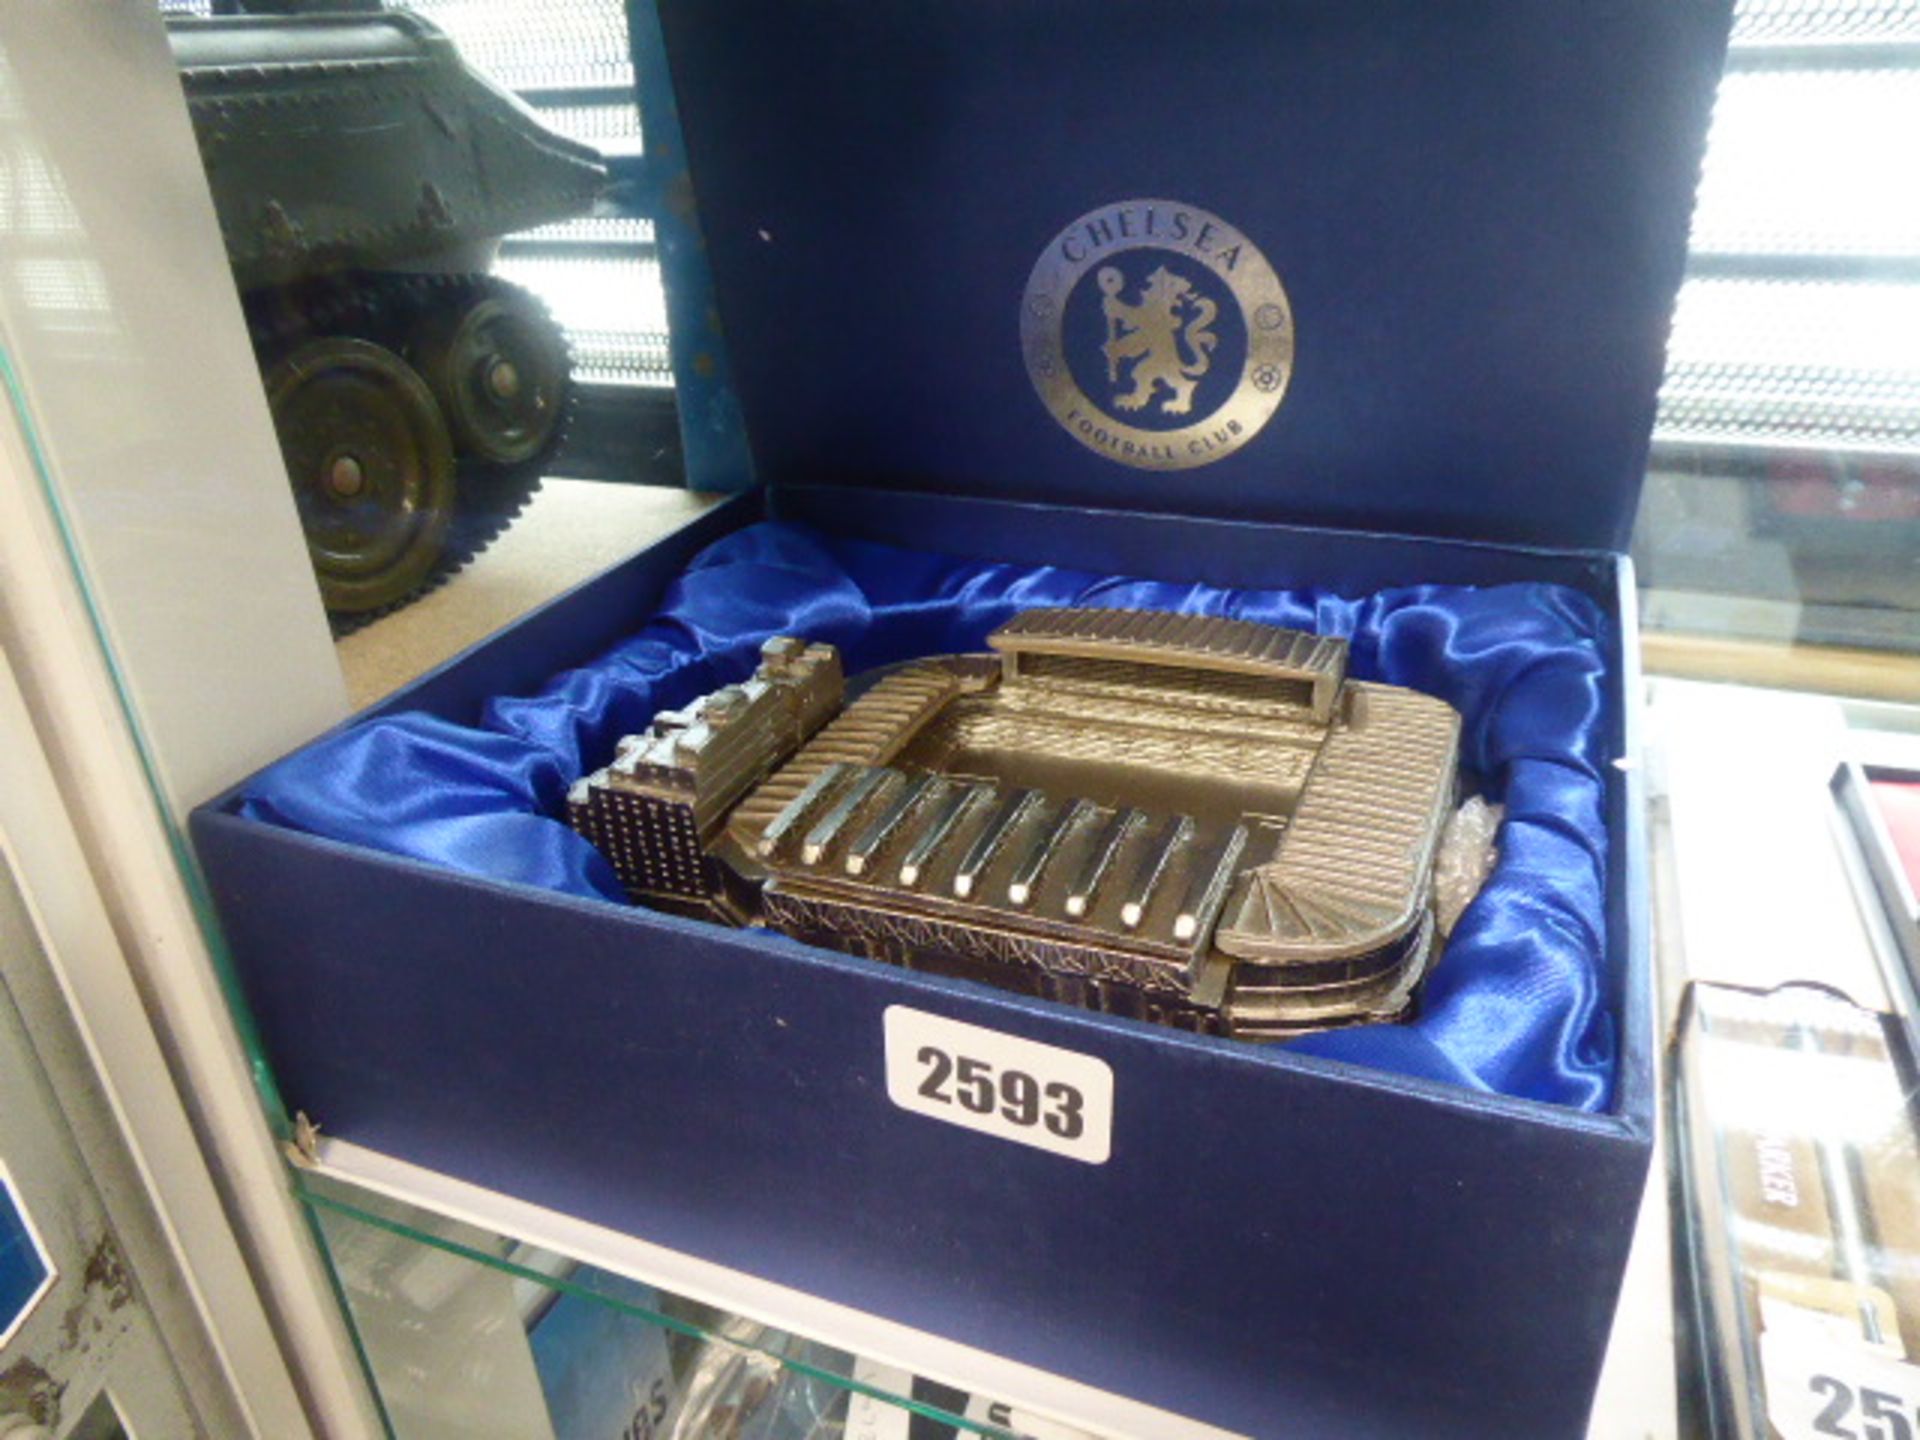 Boxed model of Chelsea FC Stamford Bridge stadium